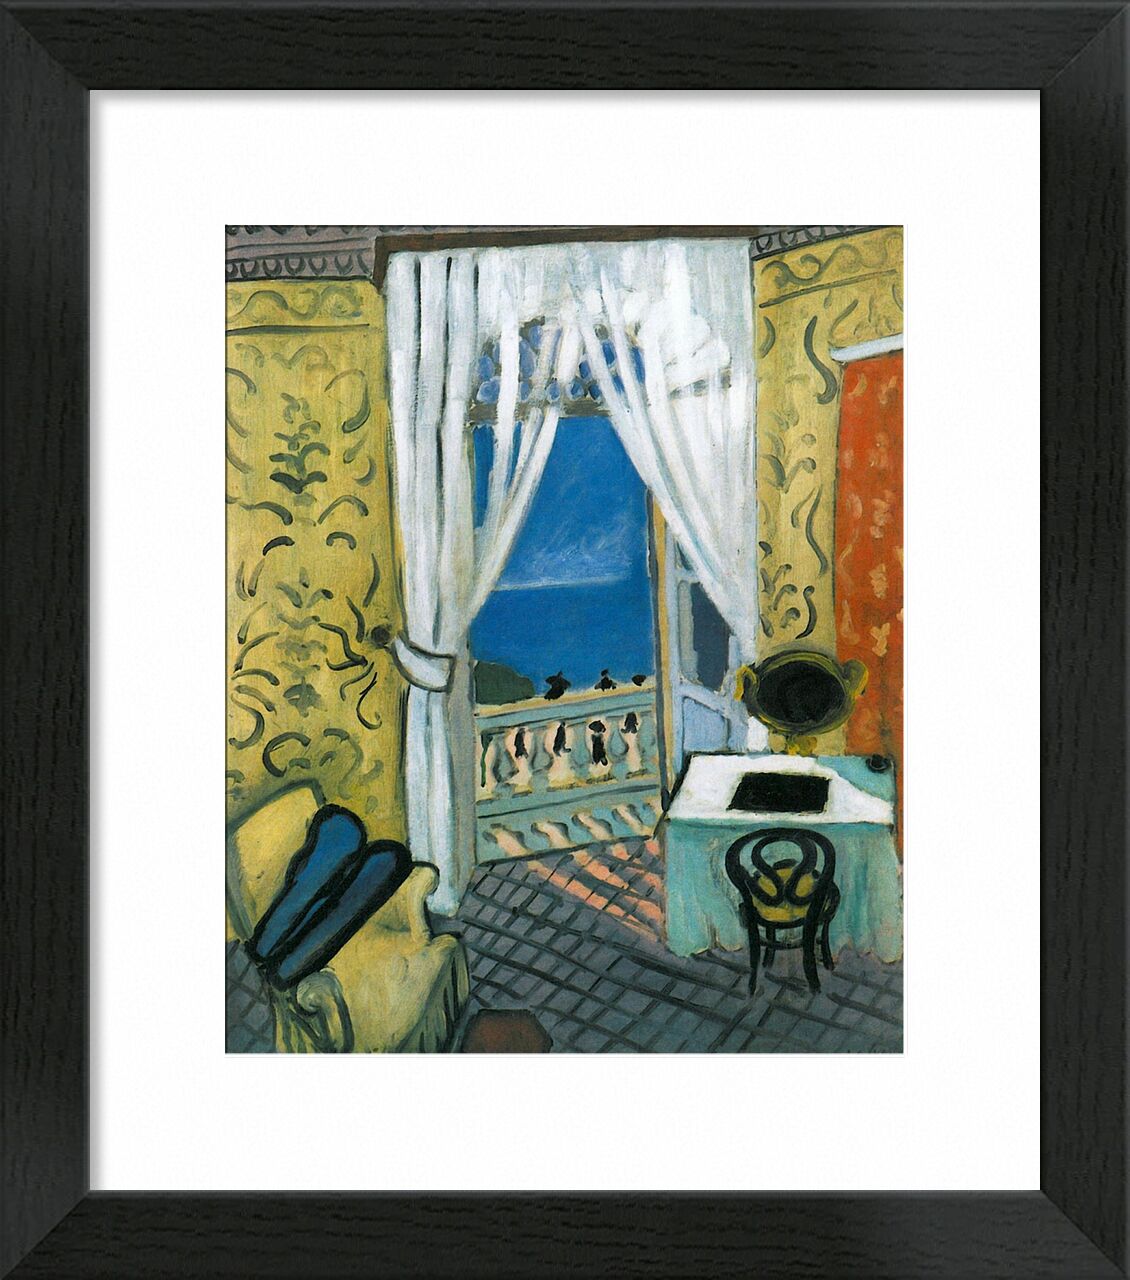 Still Life with Violin Case - Henri Matisse desde Bellas artes, Prodi Art, Matisse, violín, música, mar, ventana, sala